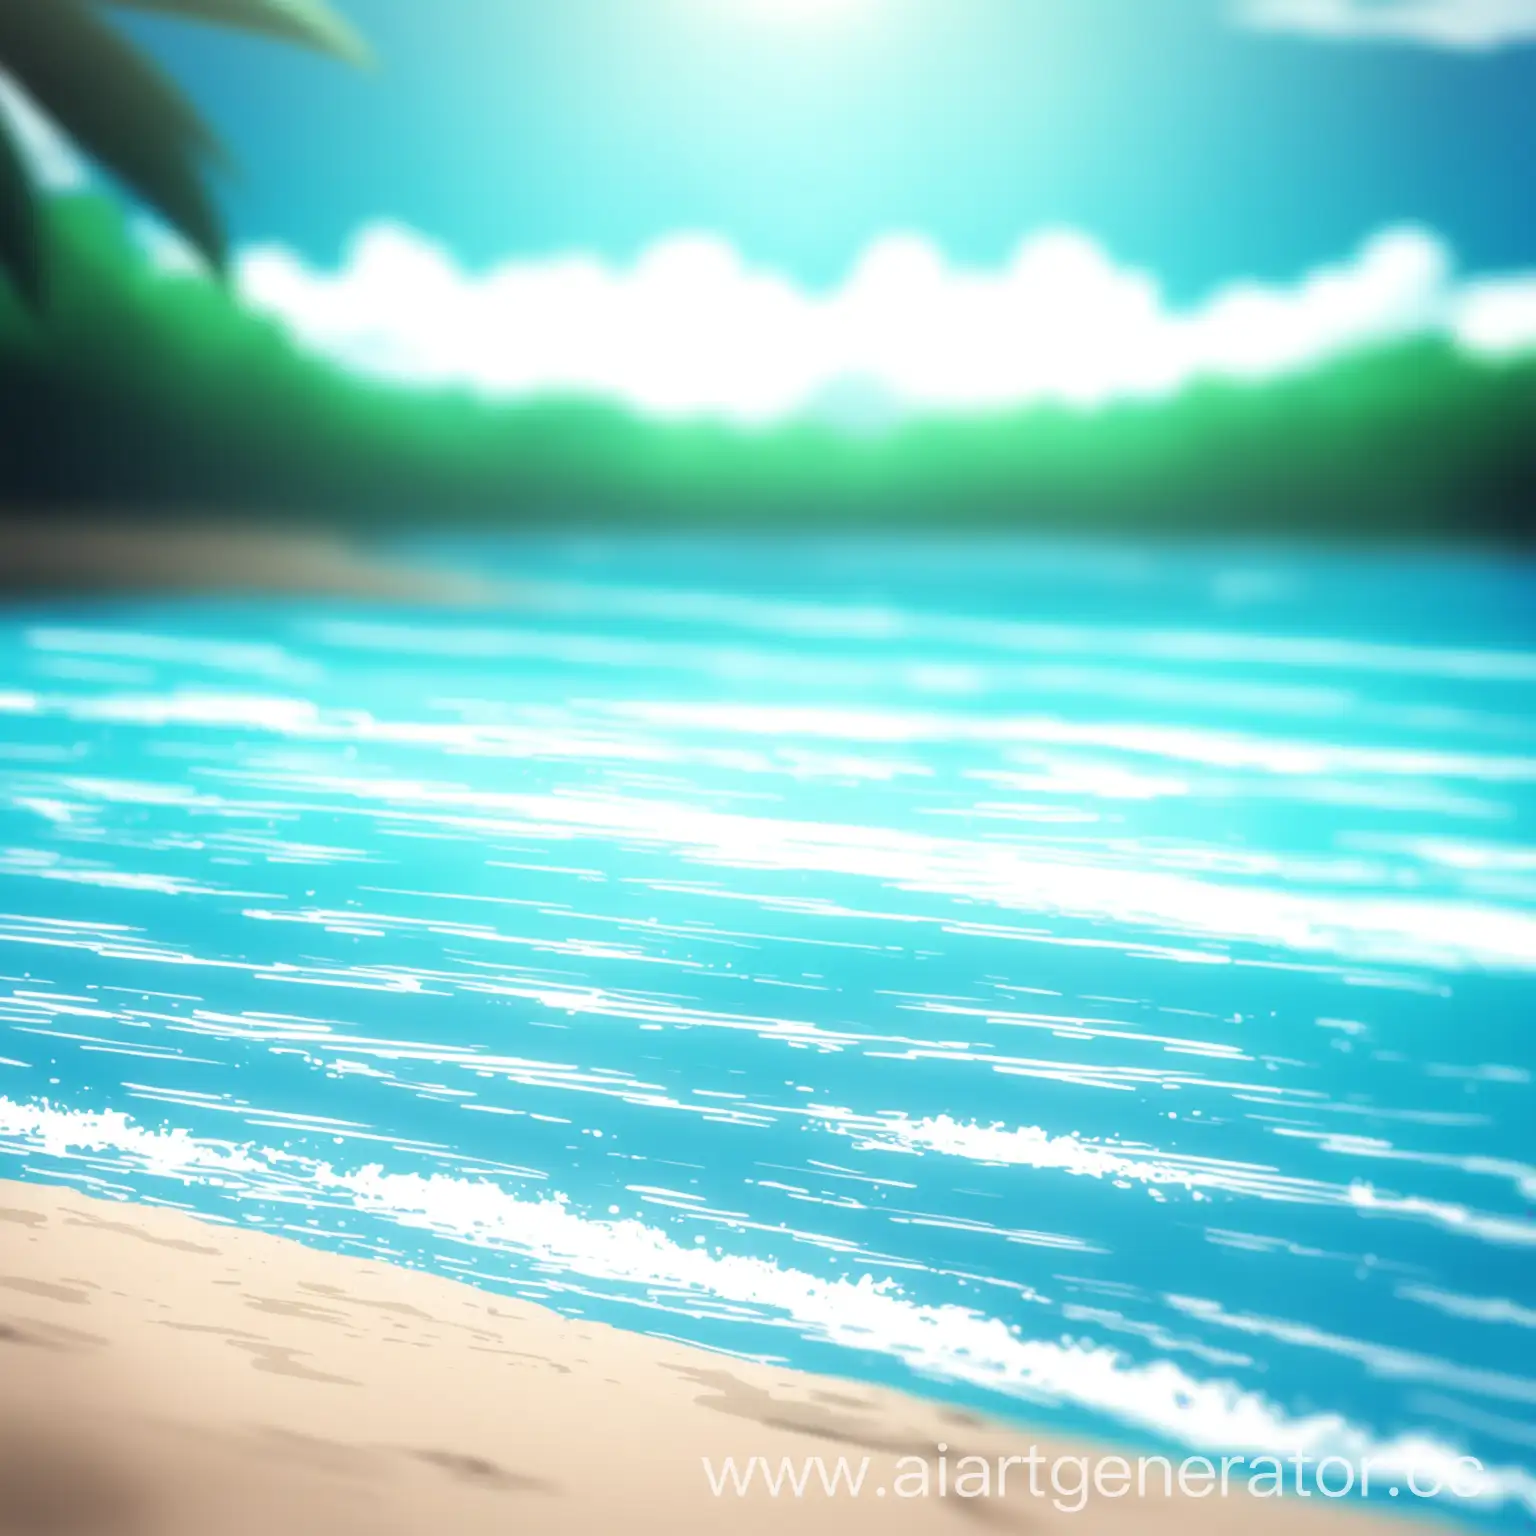 Serene-Anime-Beach-Scene-with-Blurry-Blue-Water